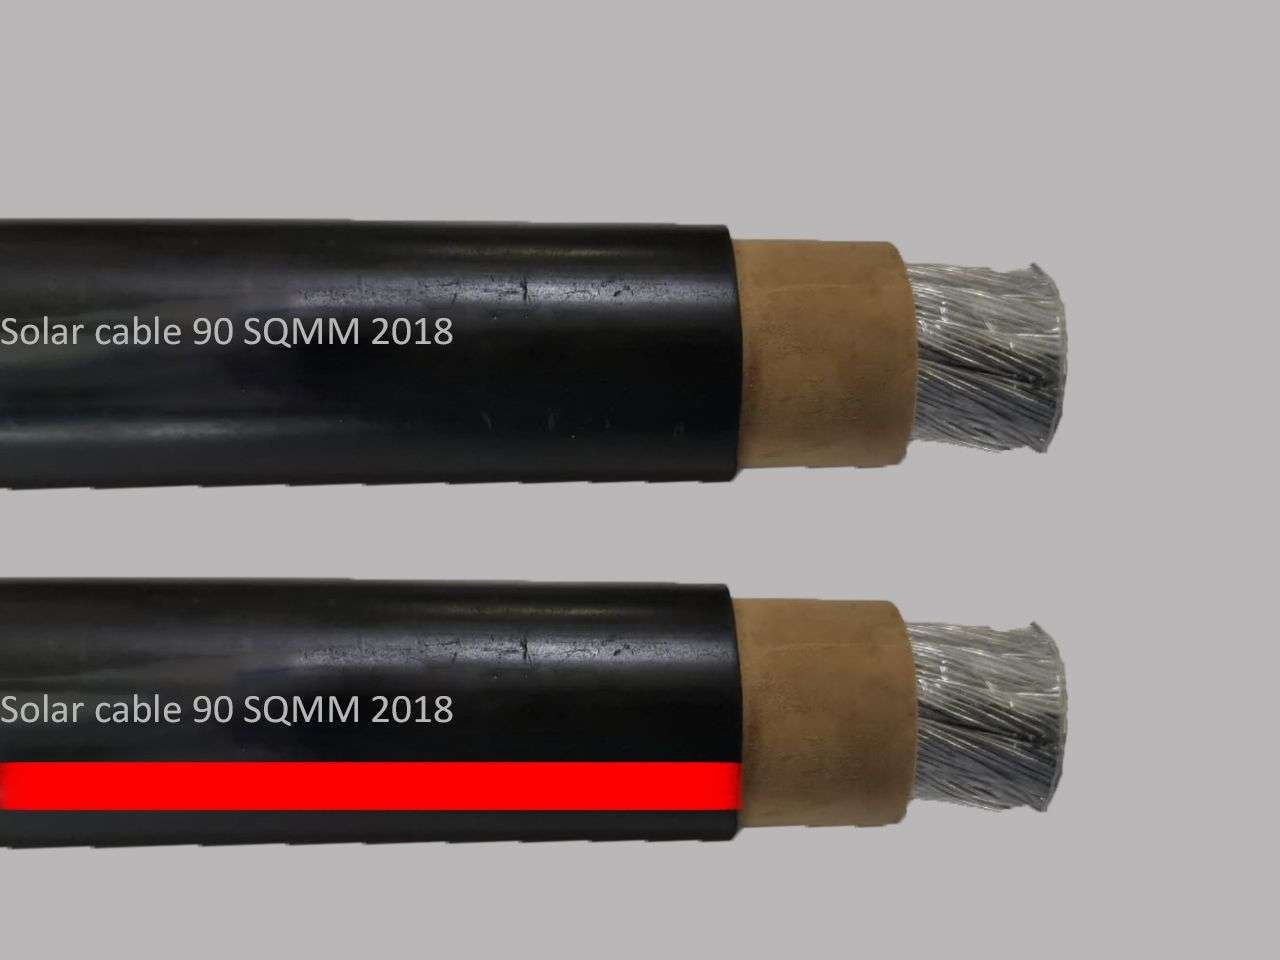 en-certified-dc-solar-cable-95-sqm-500mtr-drum-red.jpg